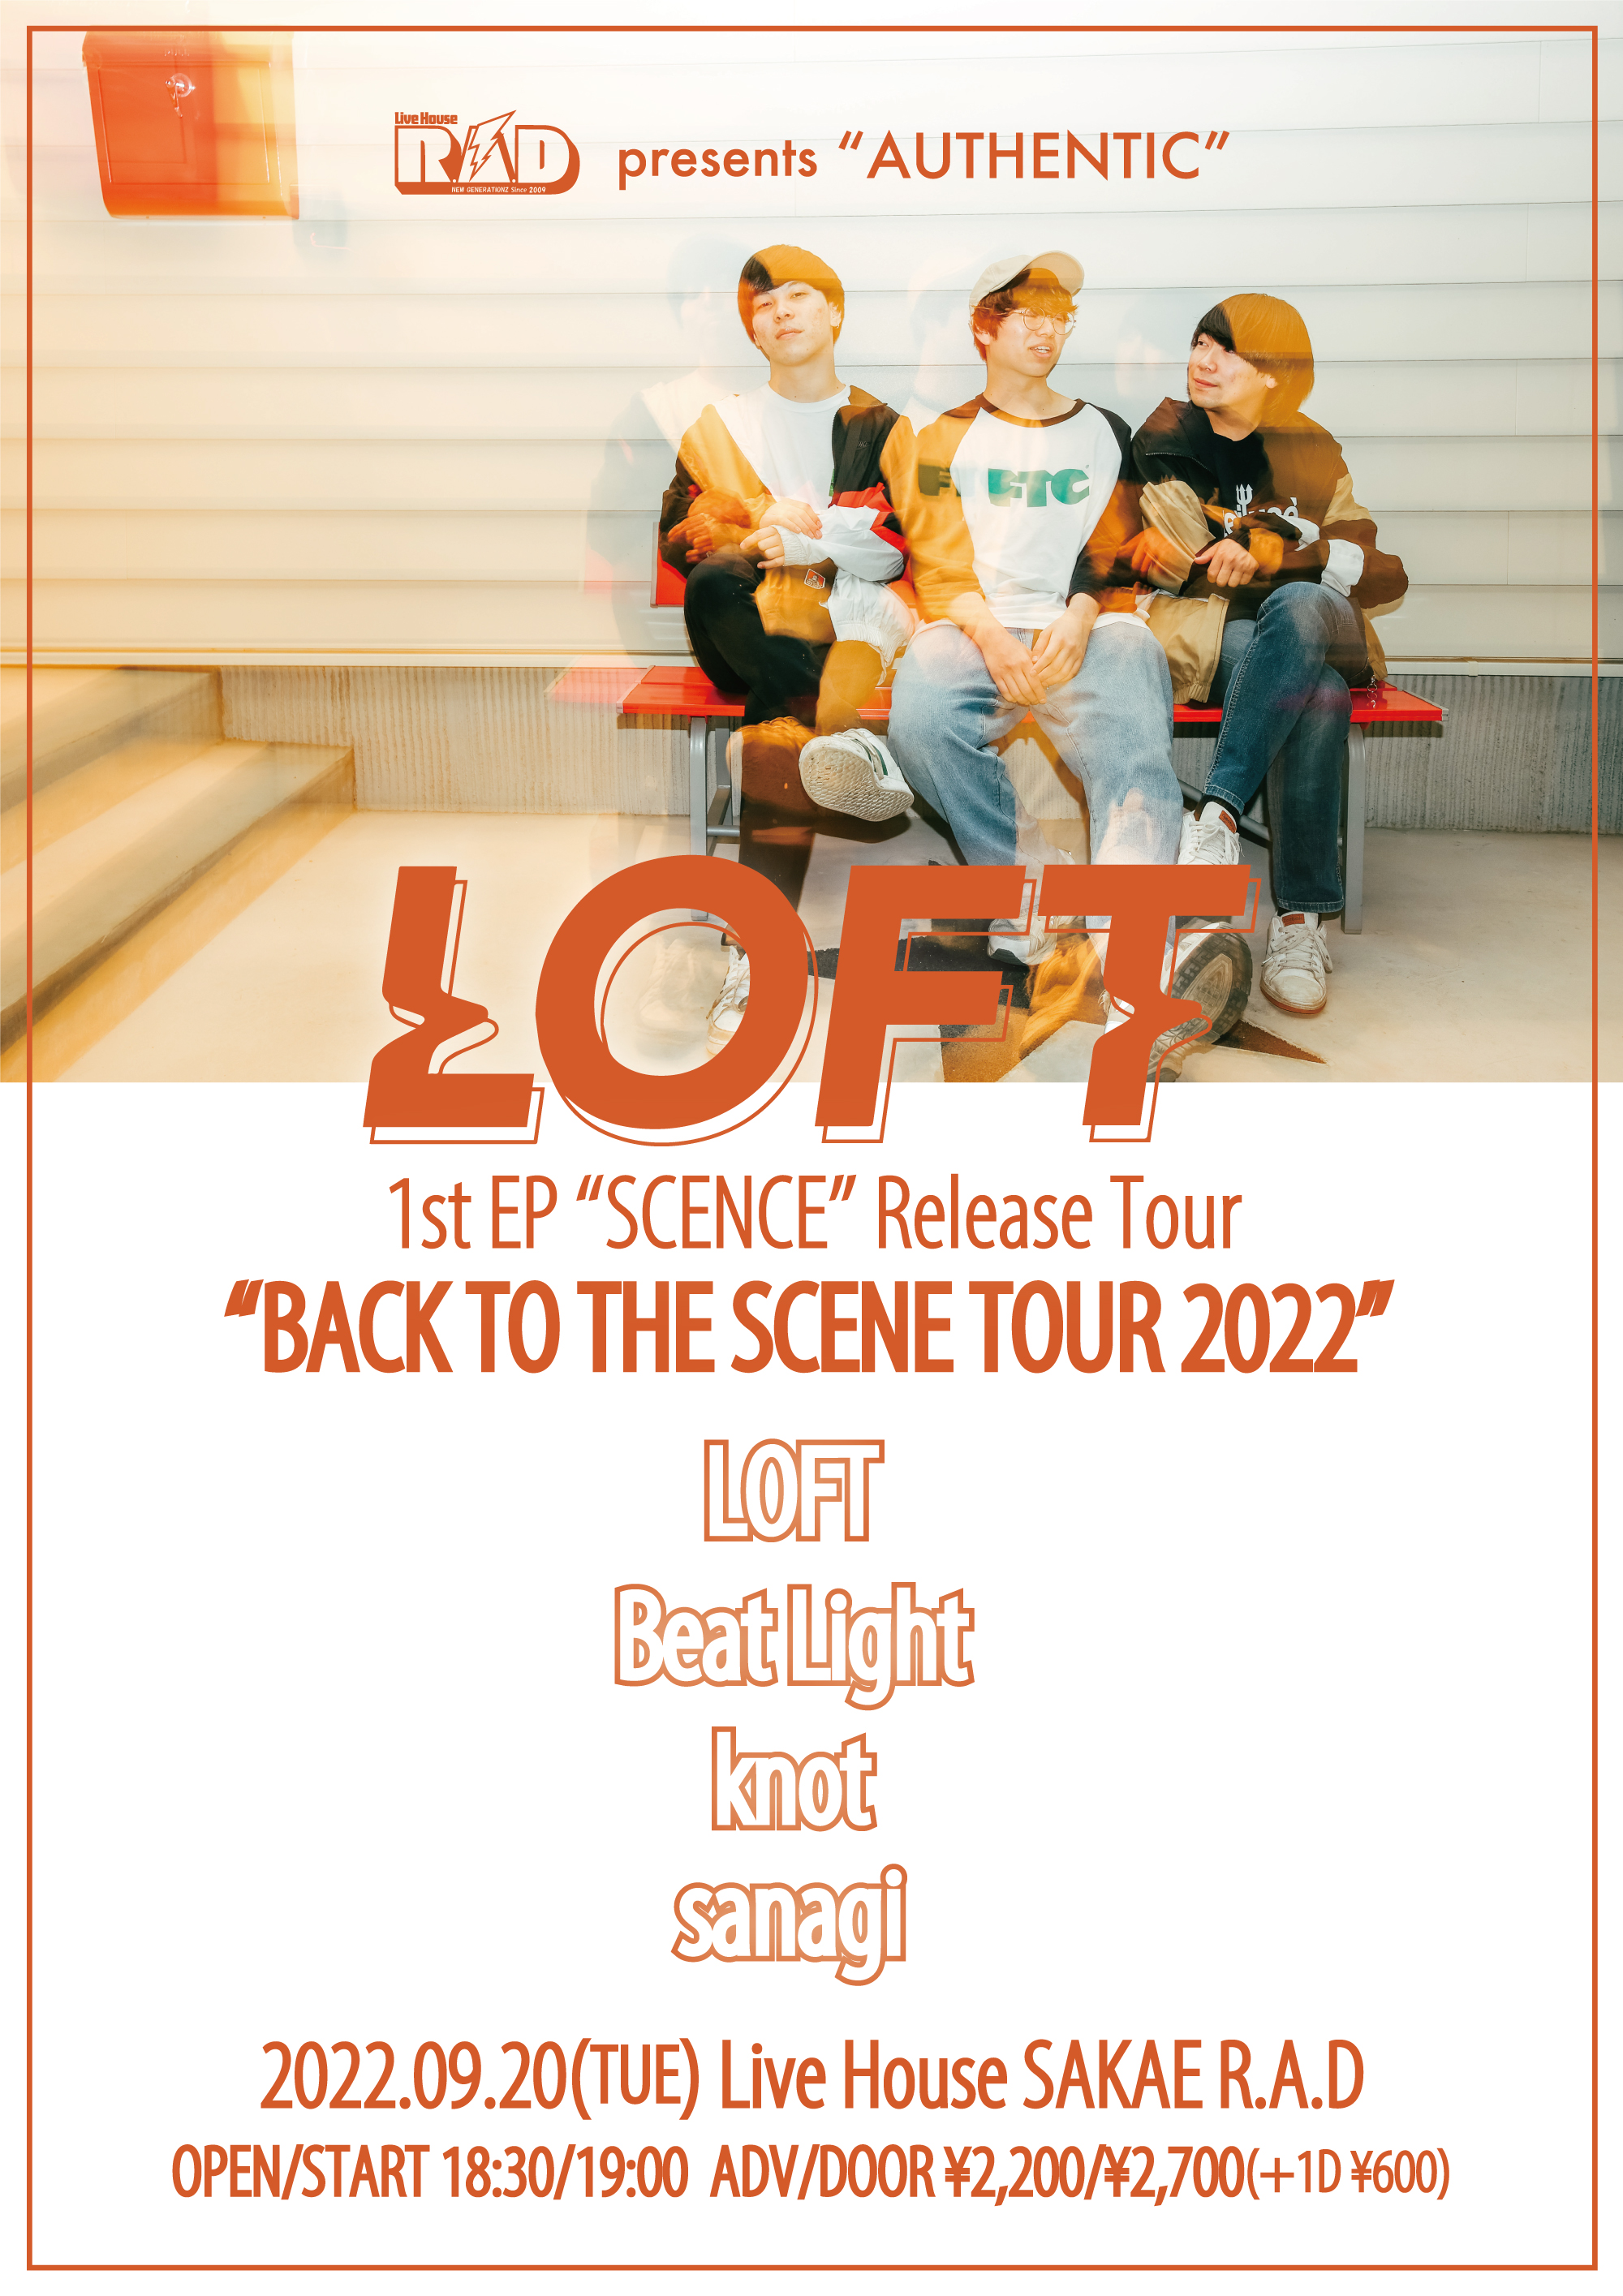 R.A.D presents "AUTHENTIC" LOFT 1st EP “SCENCE” Release Tour “BACK TO THE SCENE TOUR 2022”